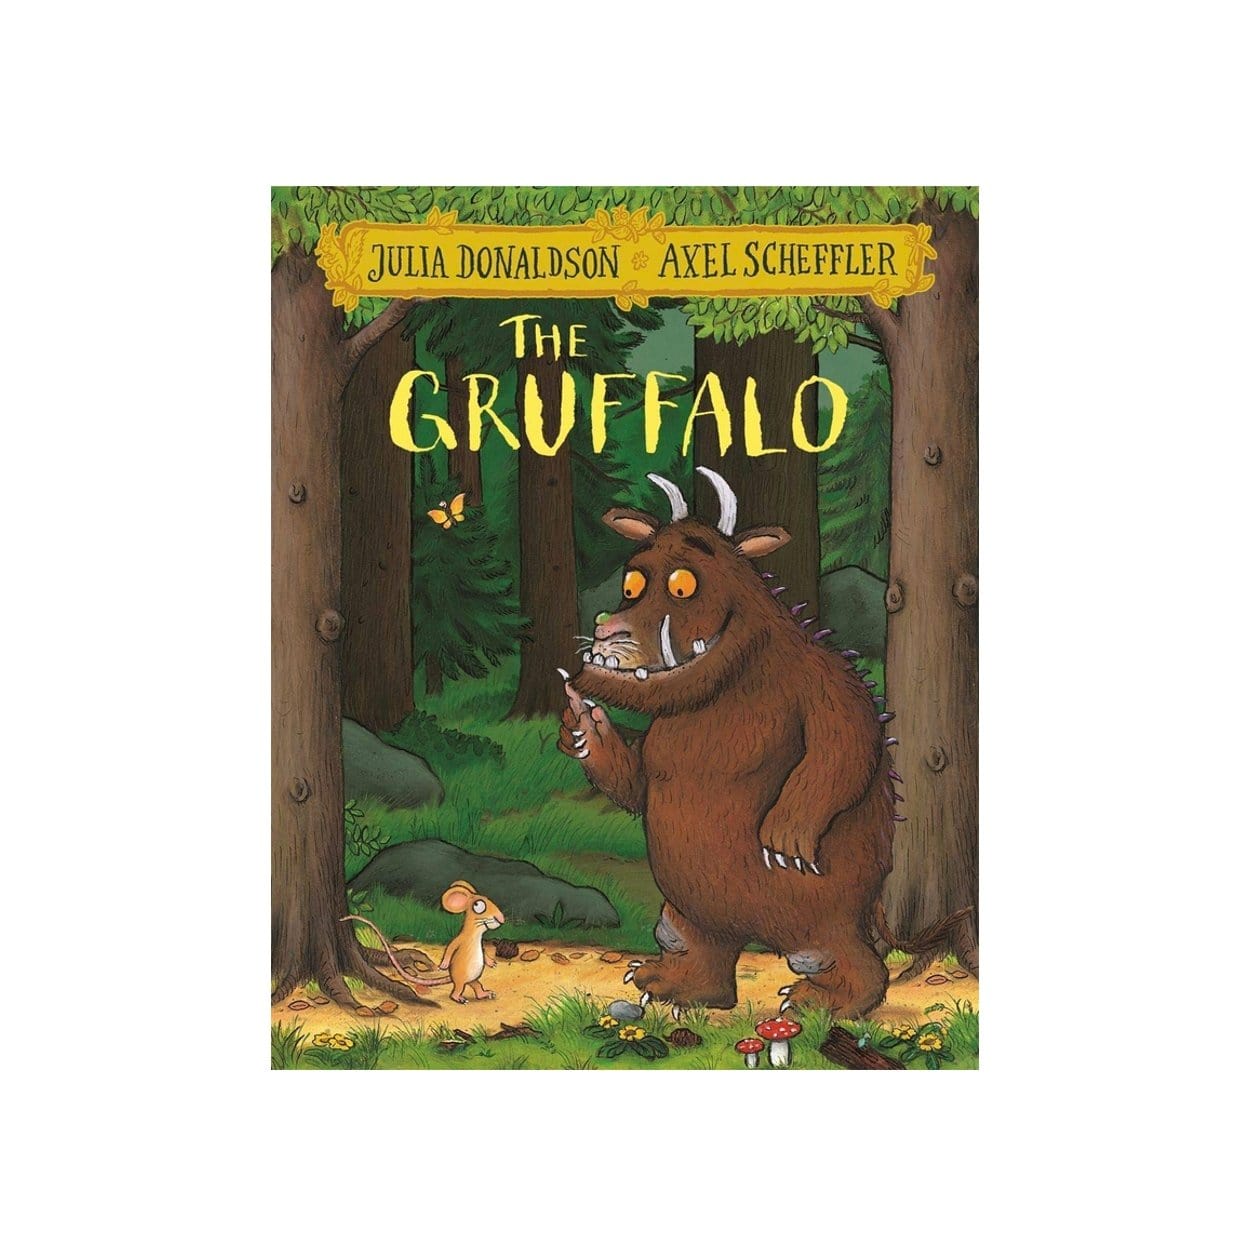 The Gruffalo - The Montessori Room Julia Donaldson and Axel Scheffler, Toronto, Ontario, Canada, classic children's books, board books, bestselling children's books